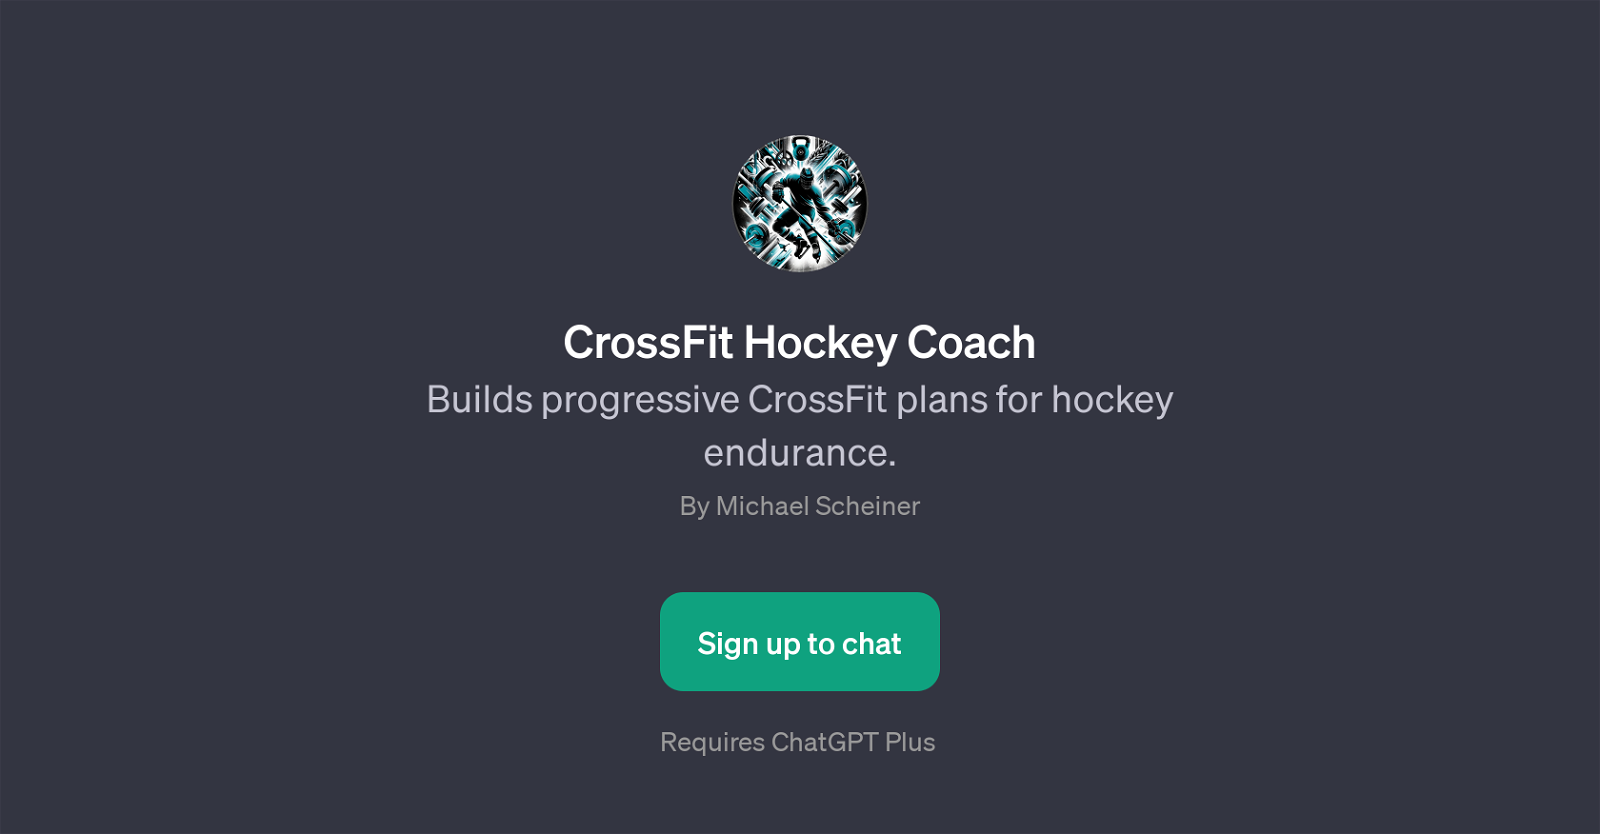 CrossFit Hockey Coach website